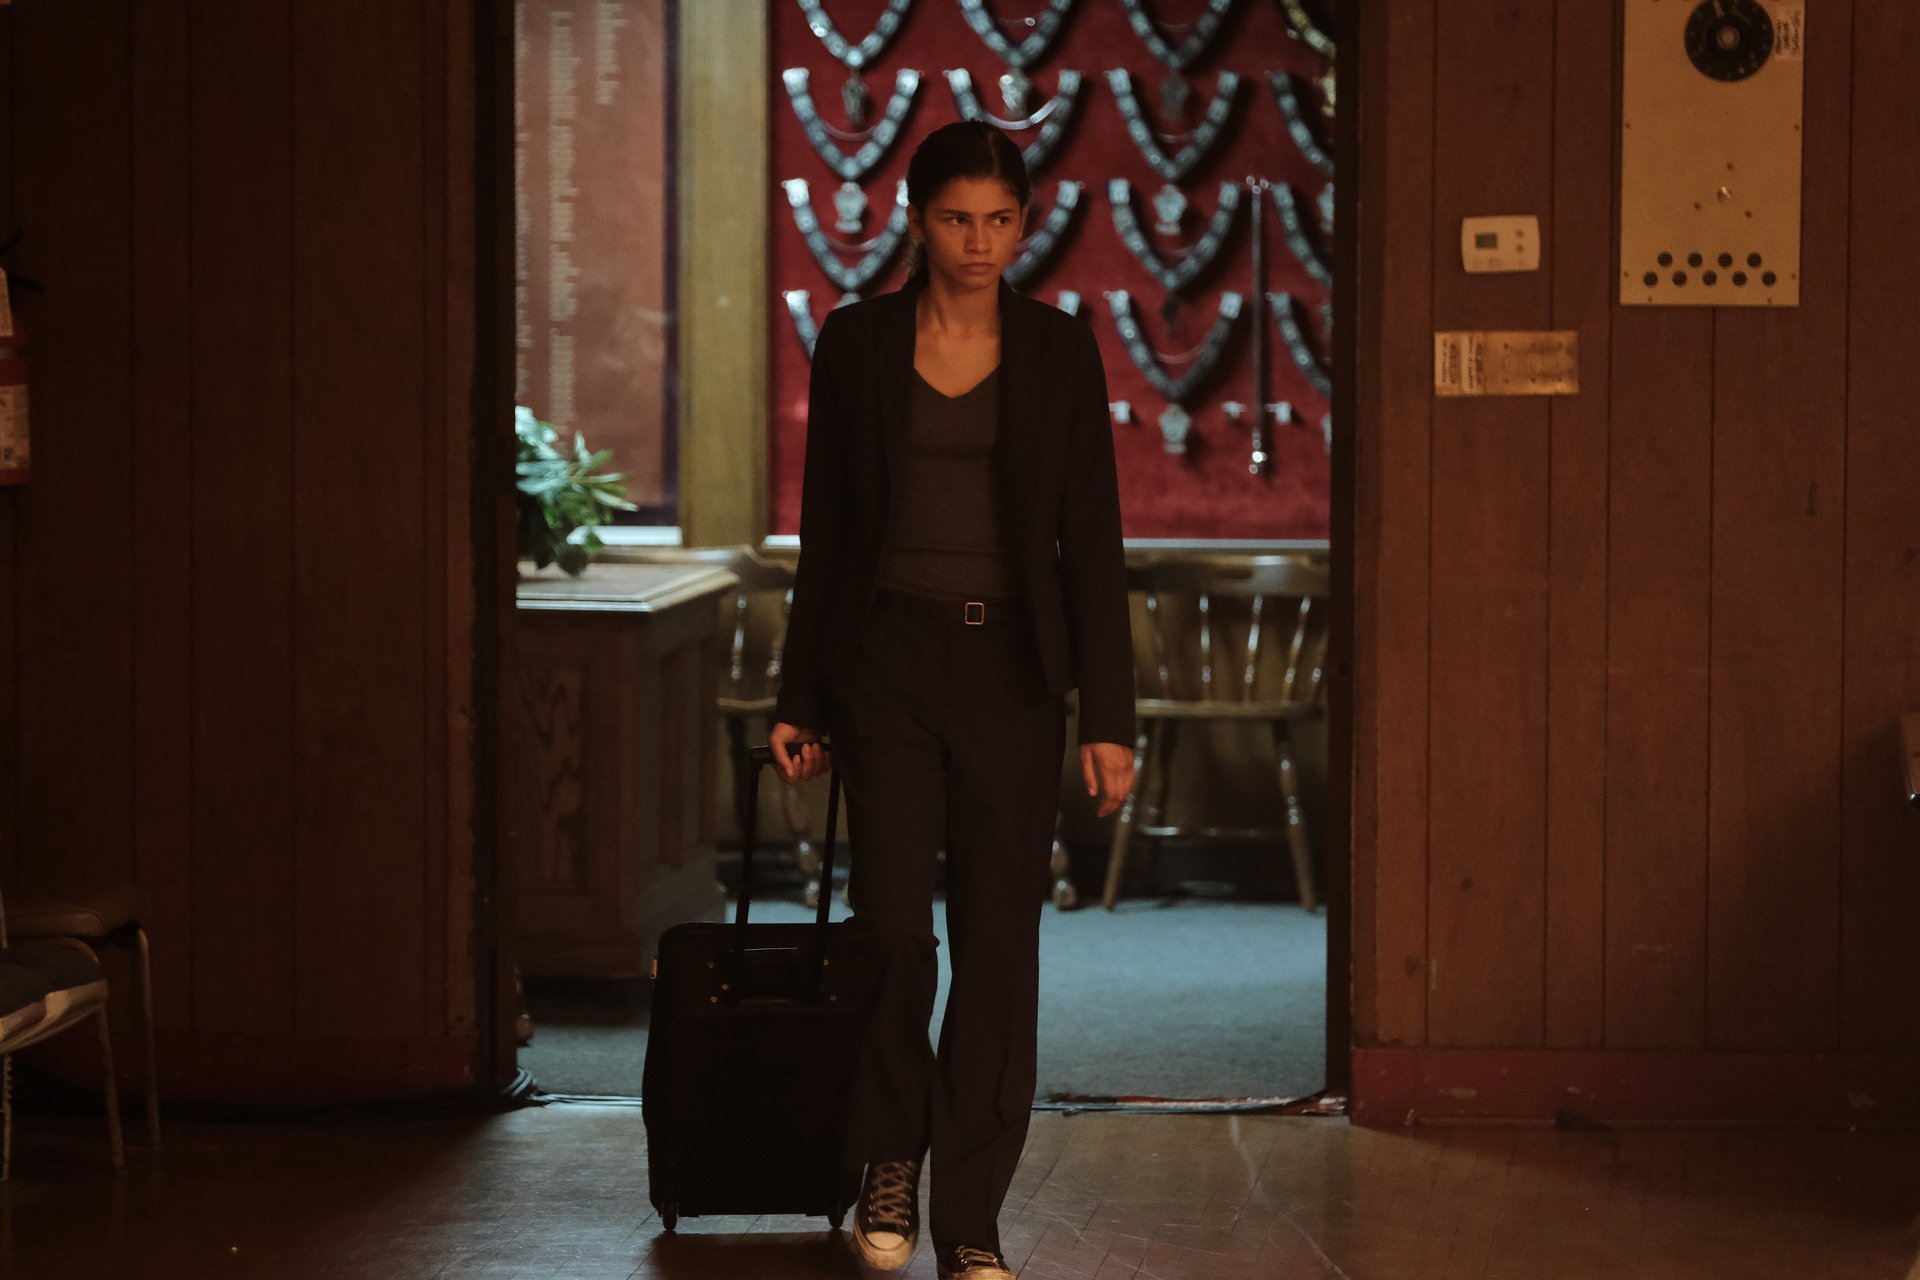 Rue holding a suitcase while walking through a house in 'Euphoria' Season 2